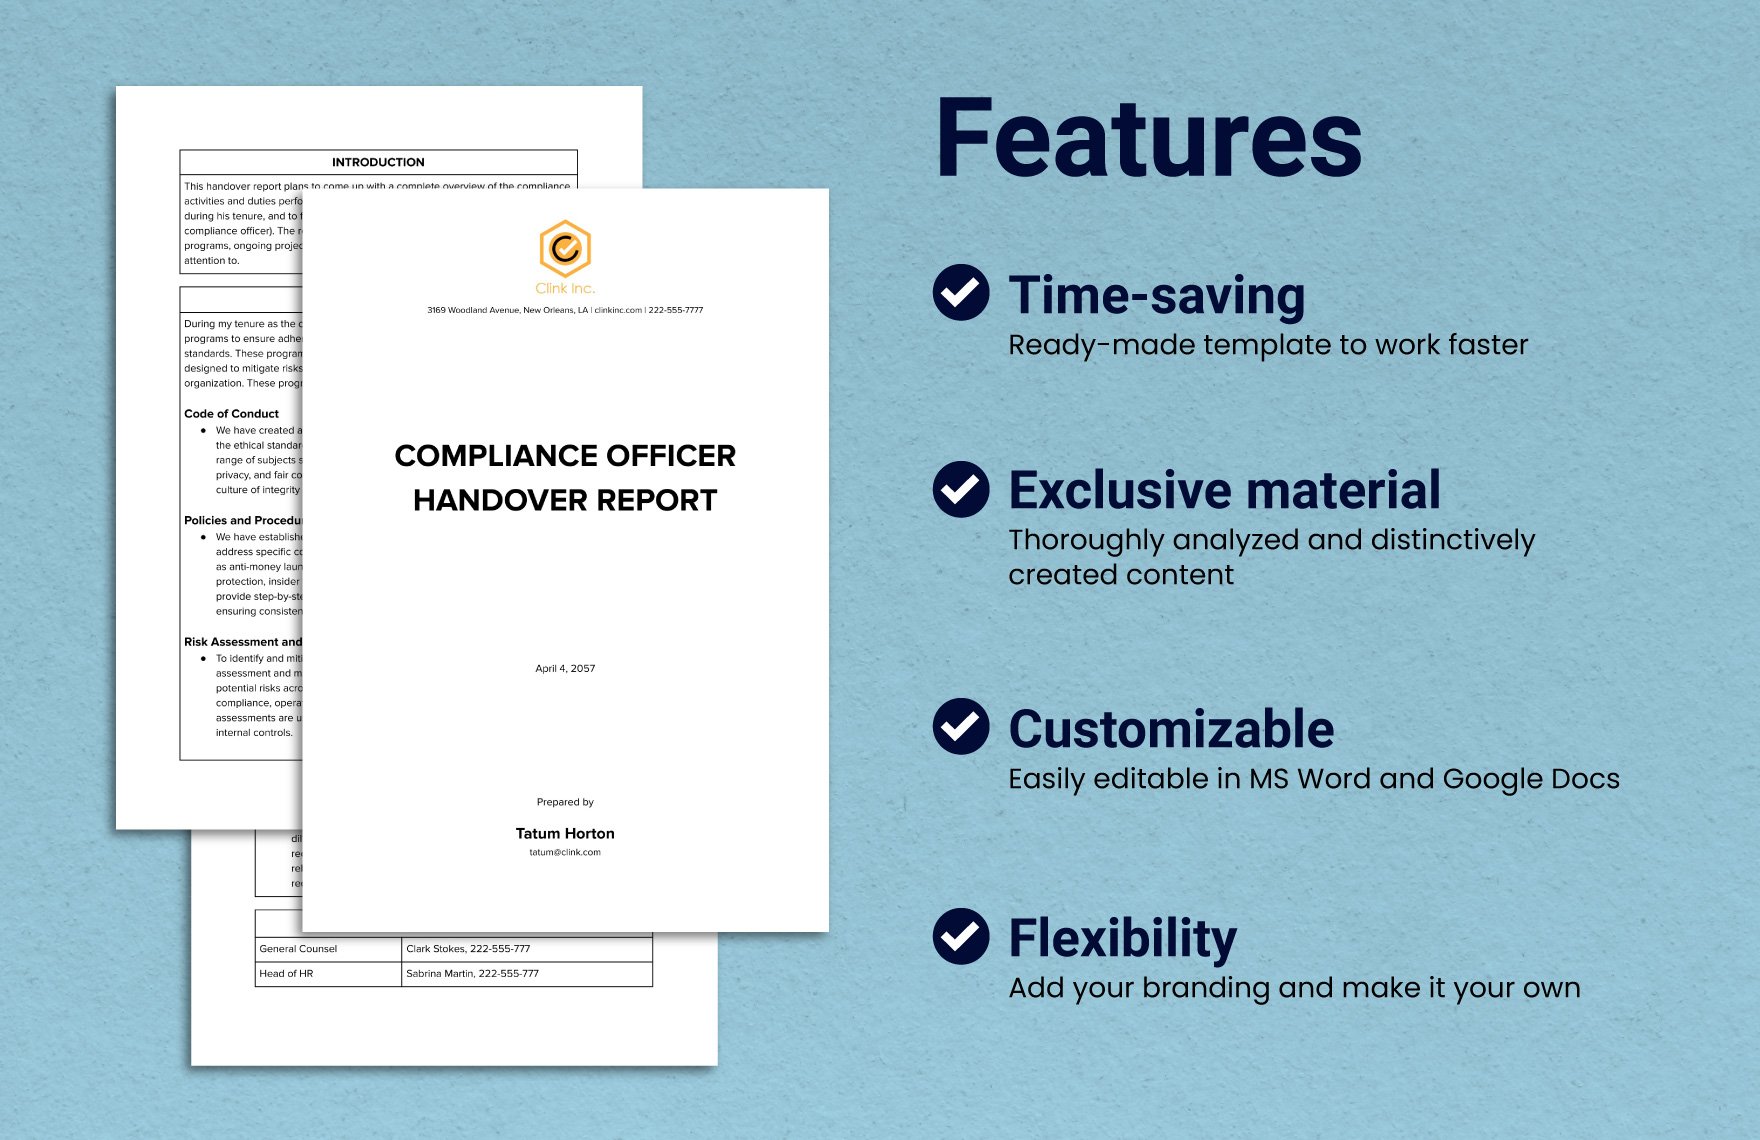 Compliance Officer Handover Report